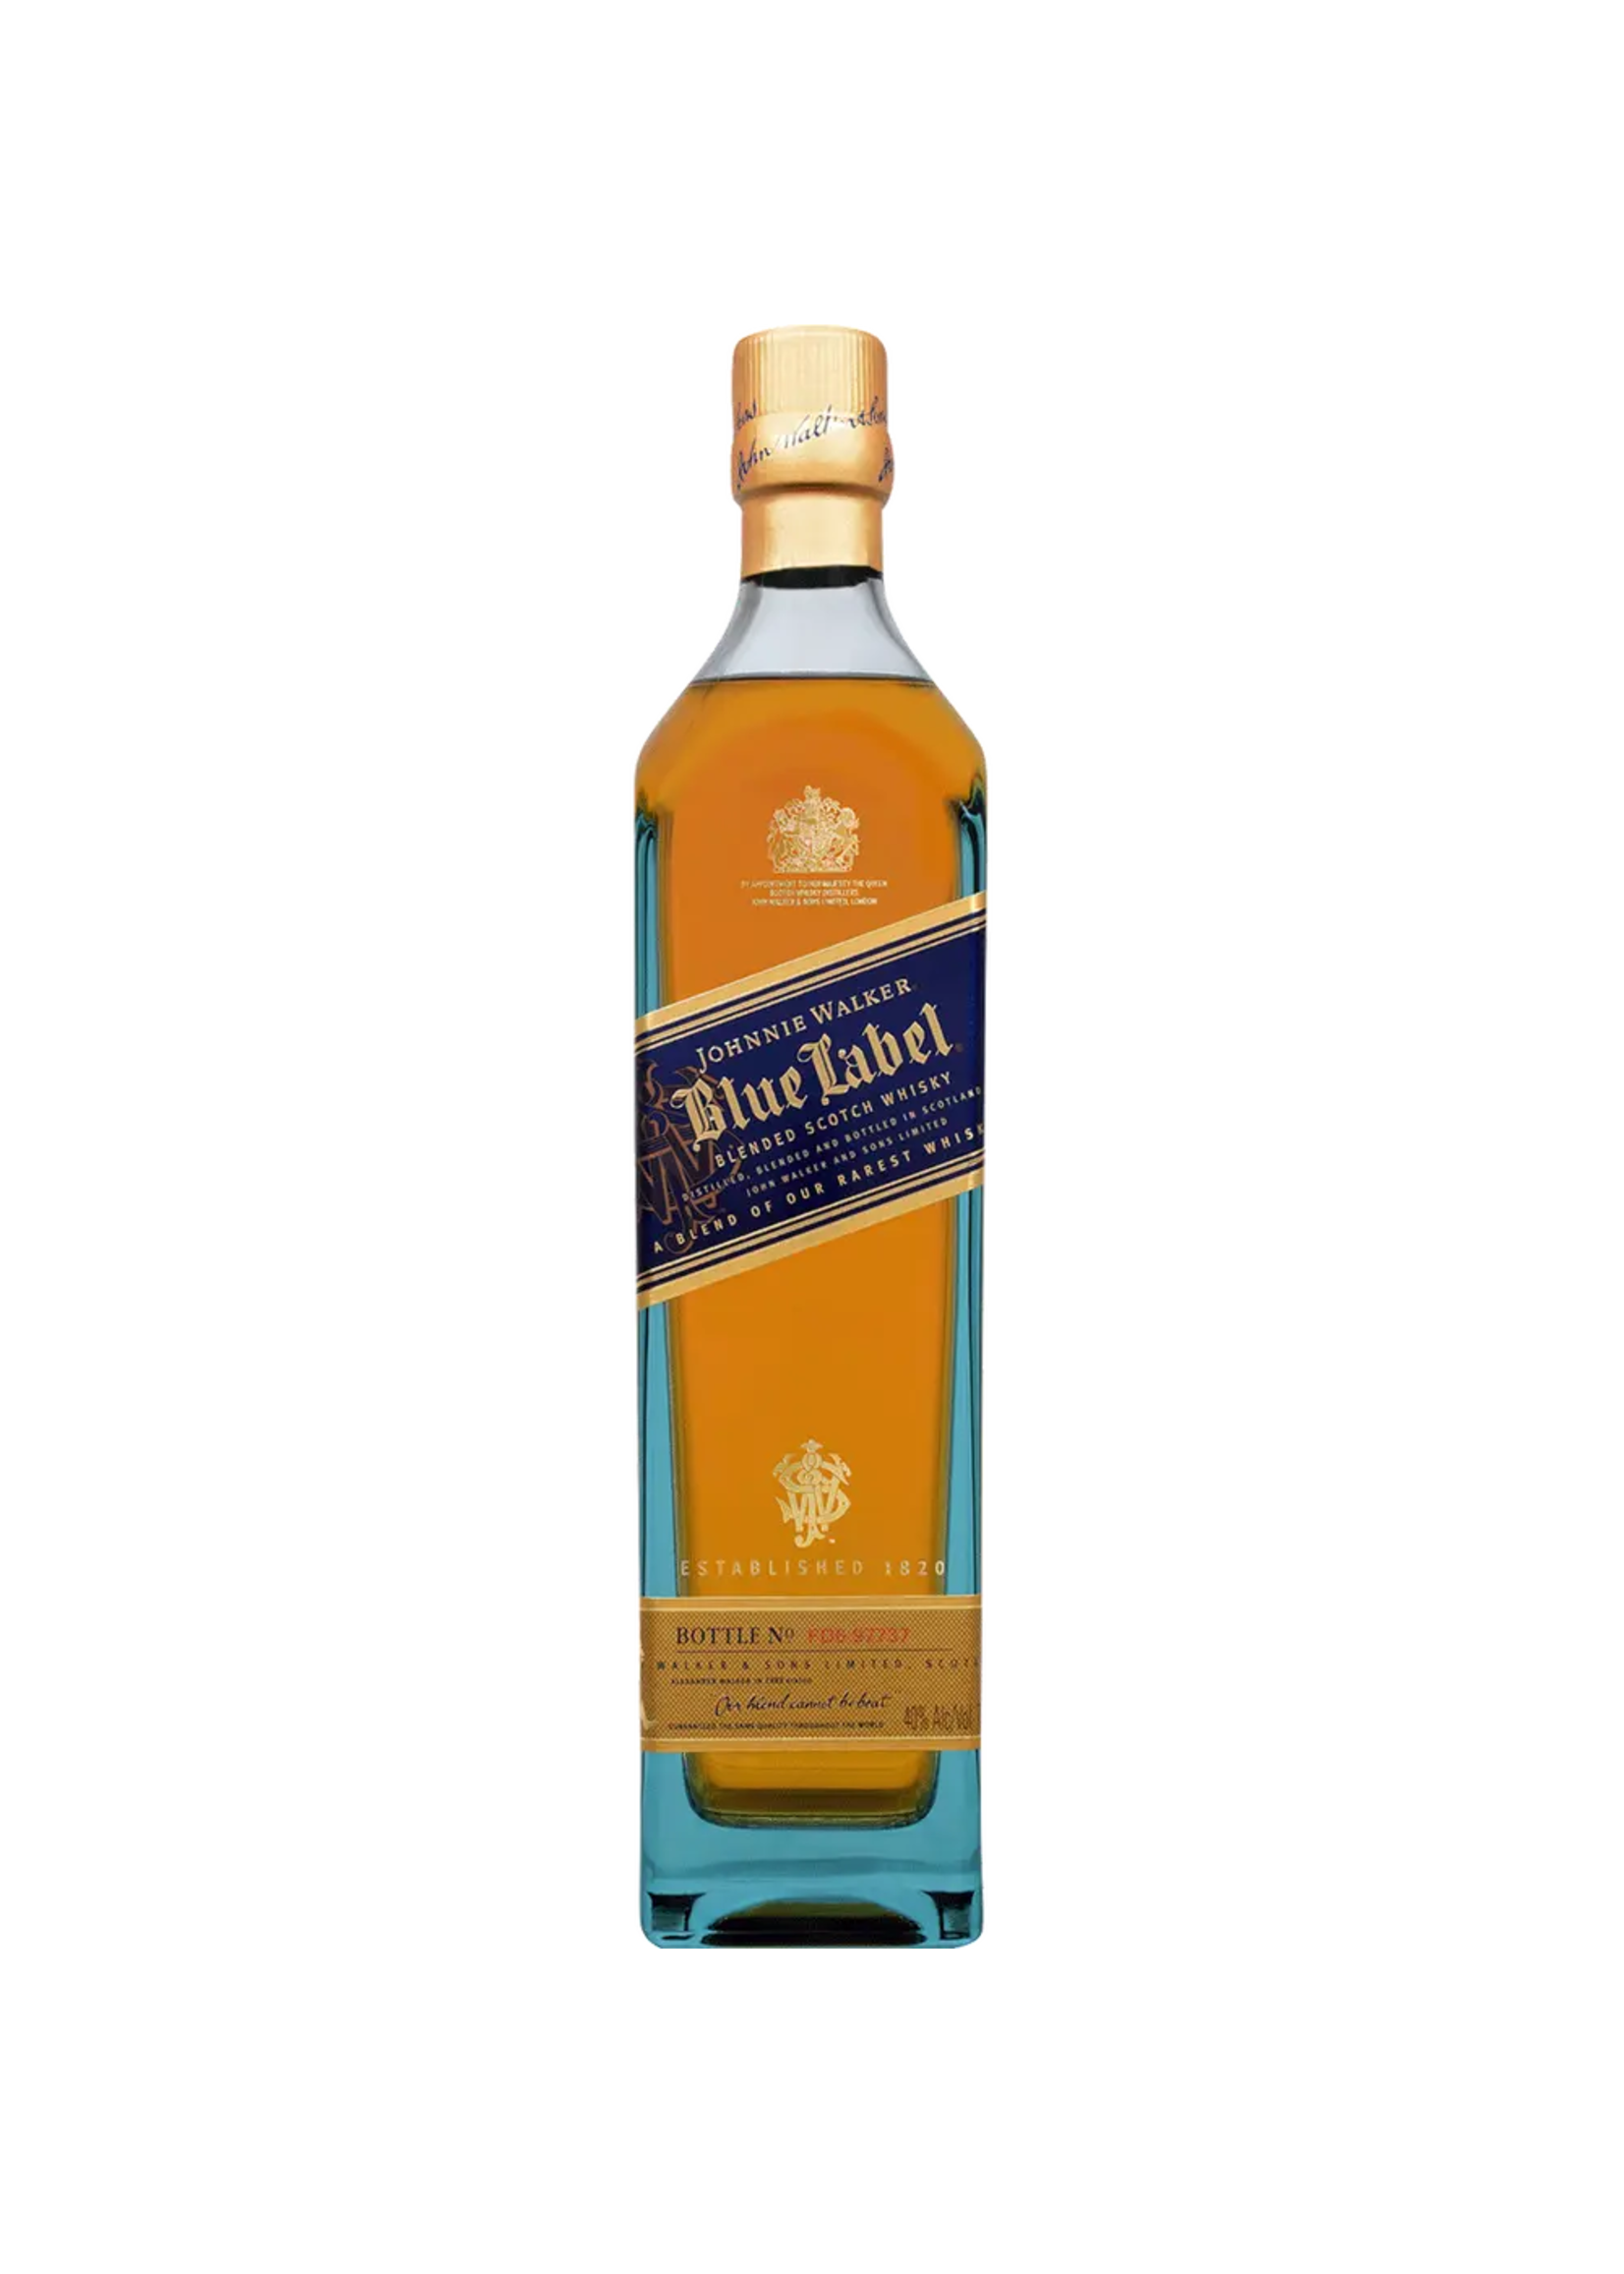 Johnnie Walker Scotch Johnnie Walker Blended Scotch Blue Label 80Proof 750ml